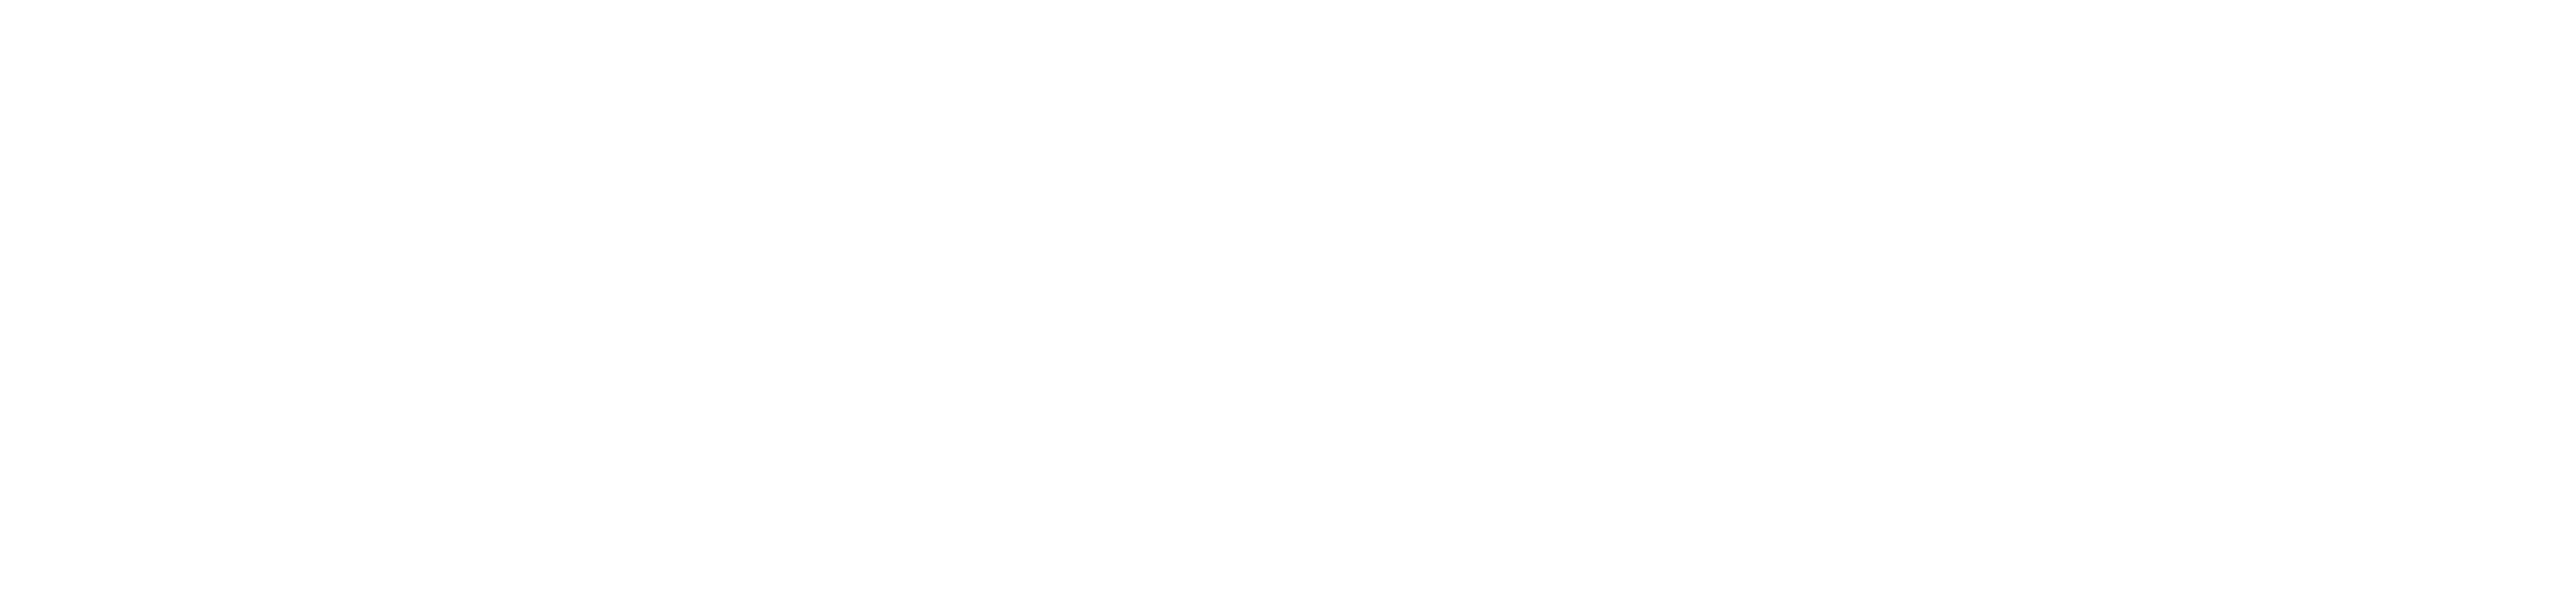 Fun Club Yacht Charters